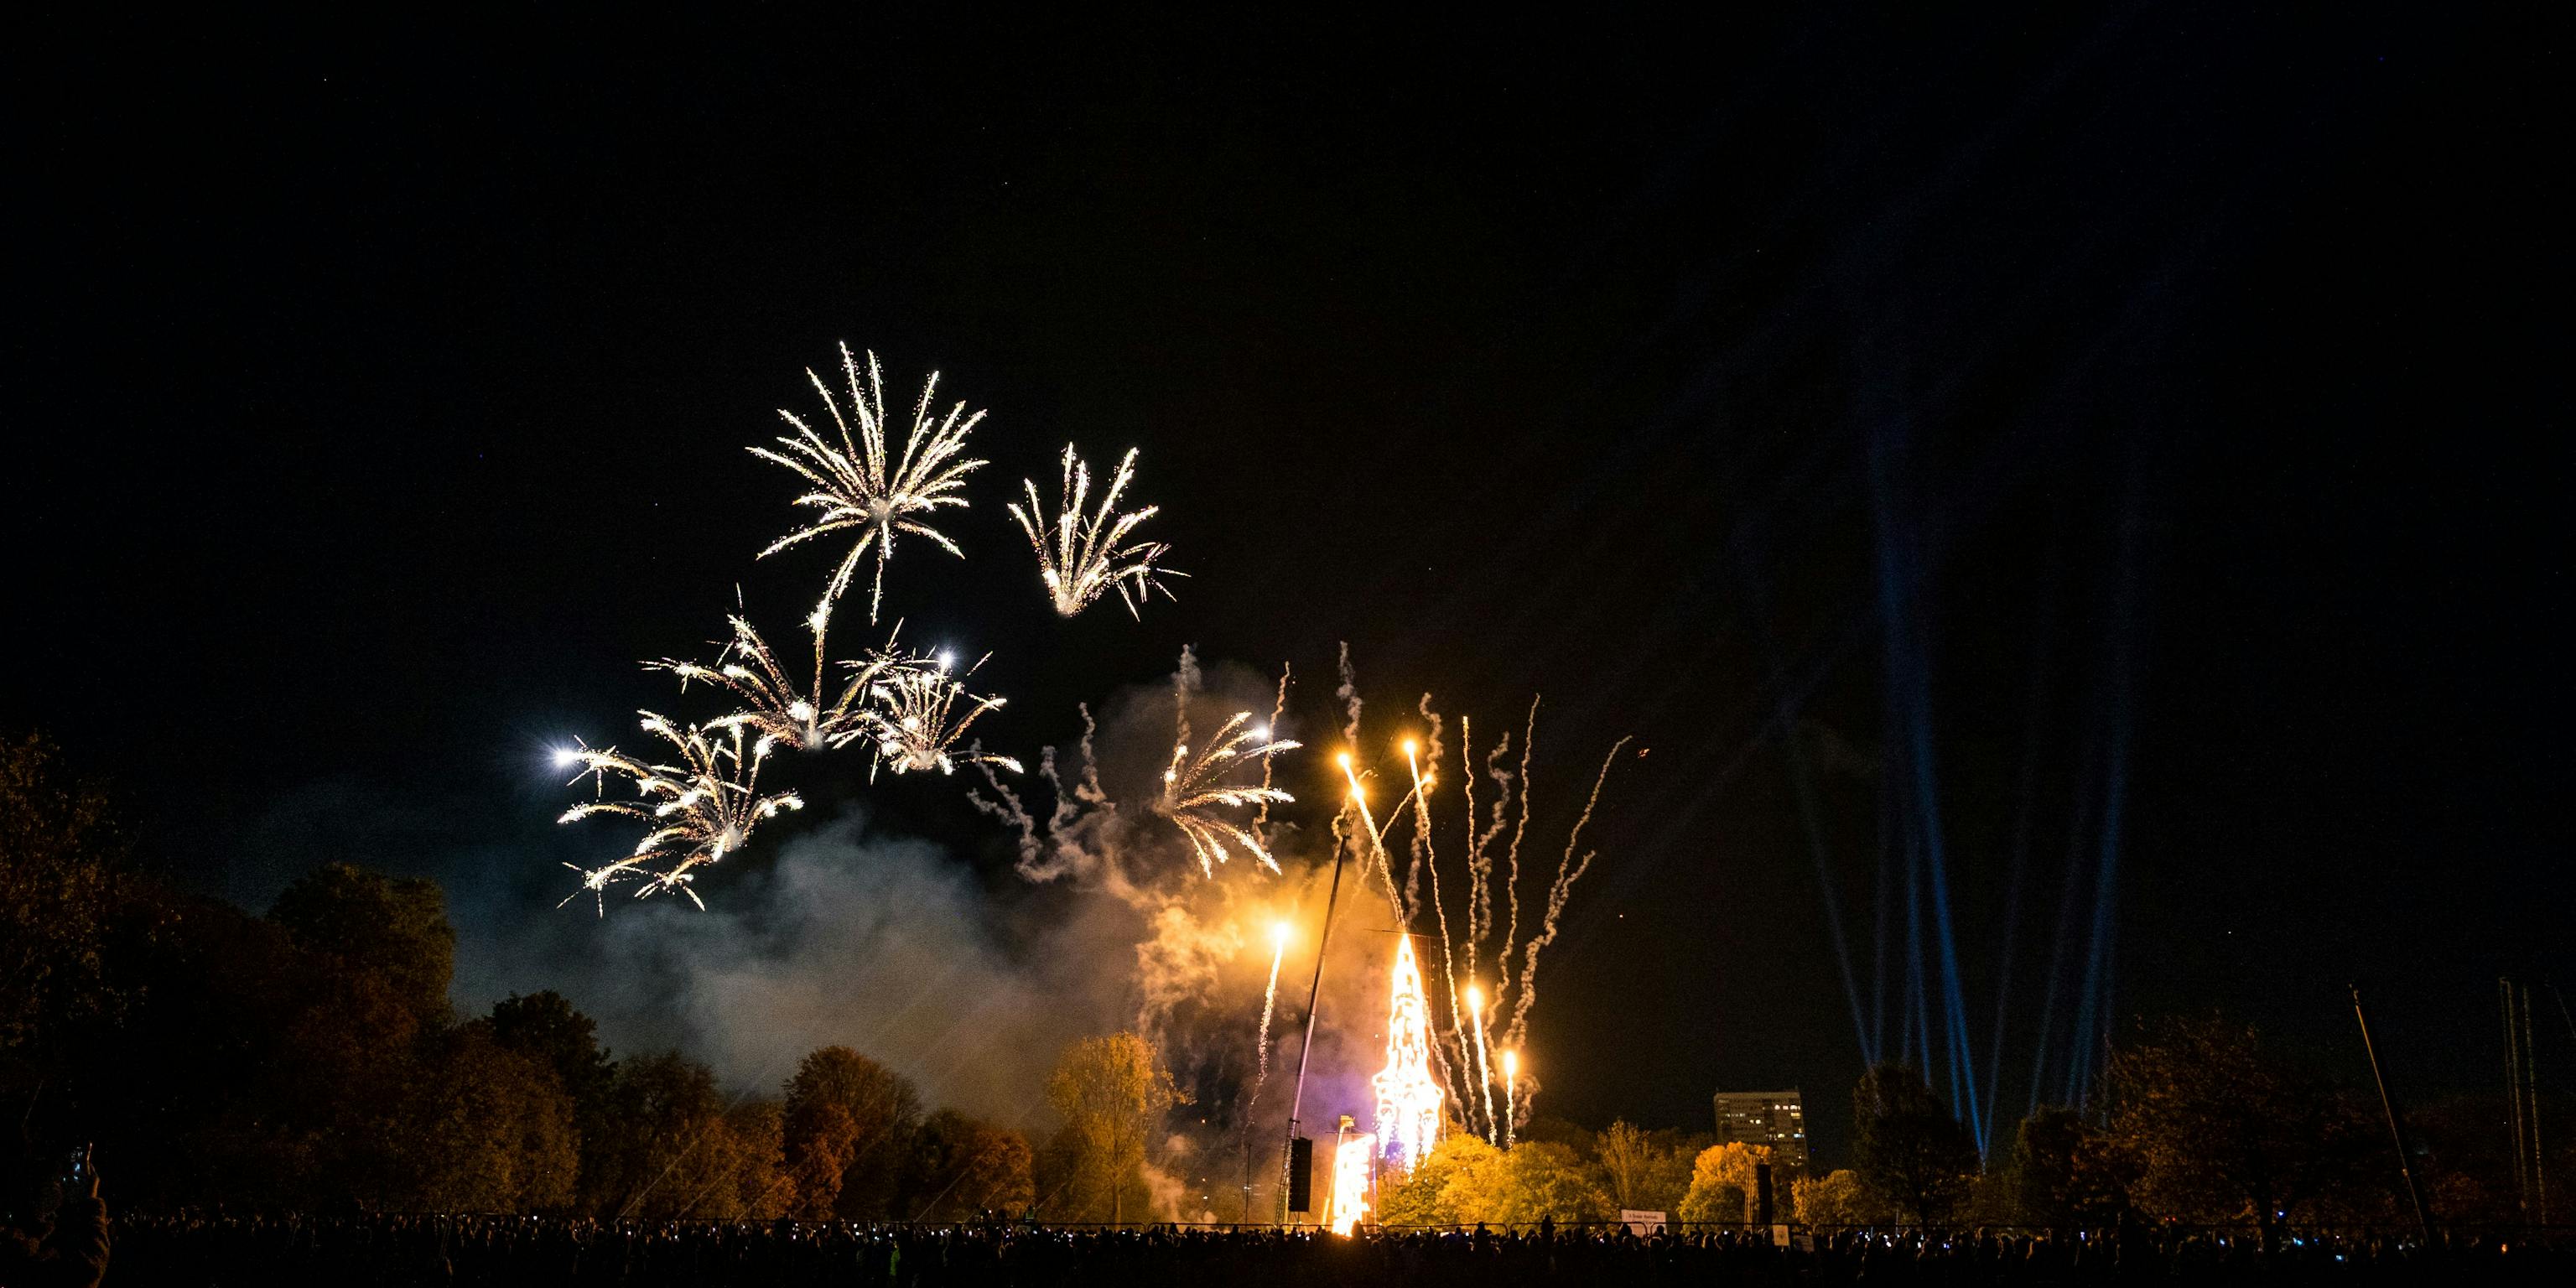 Fireworks against a night sky